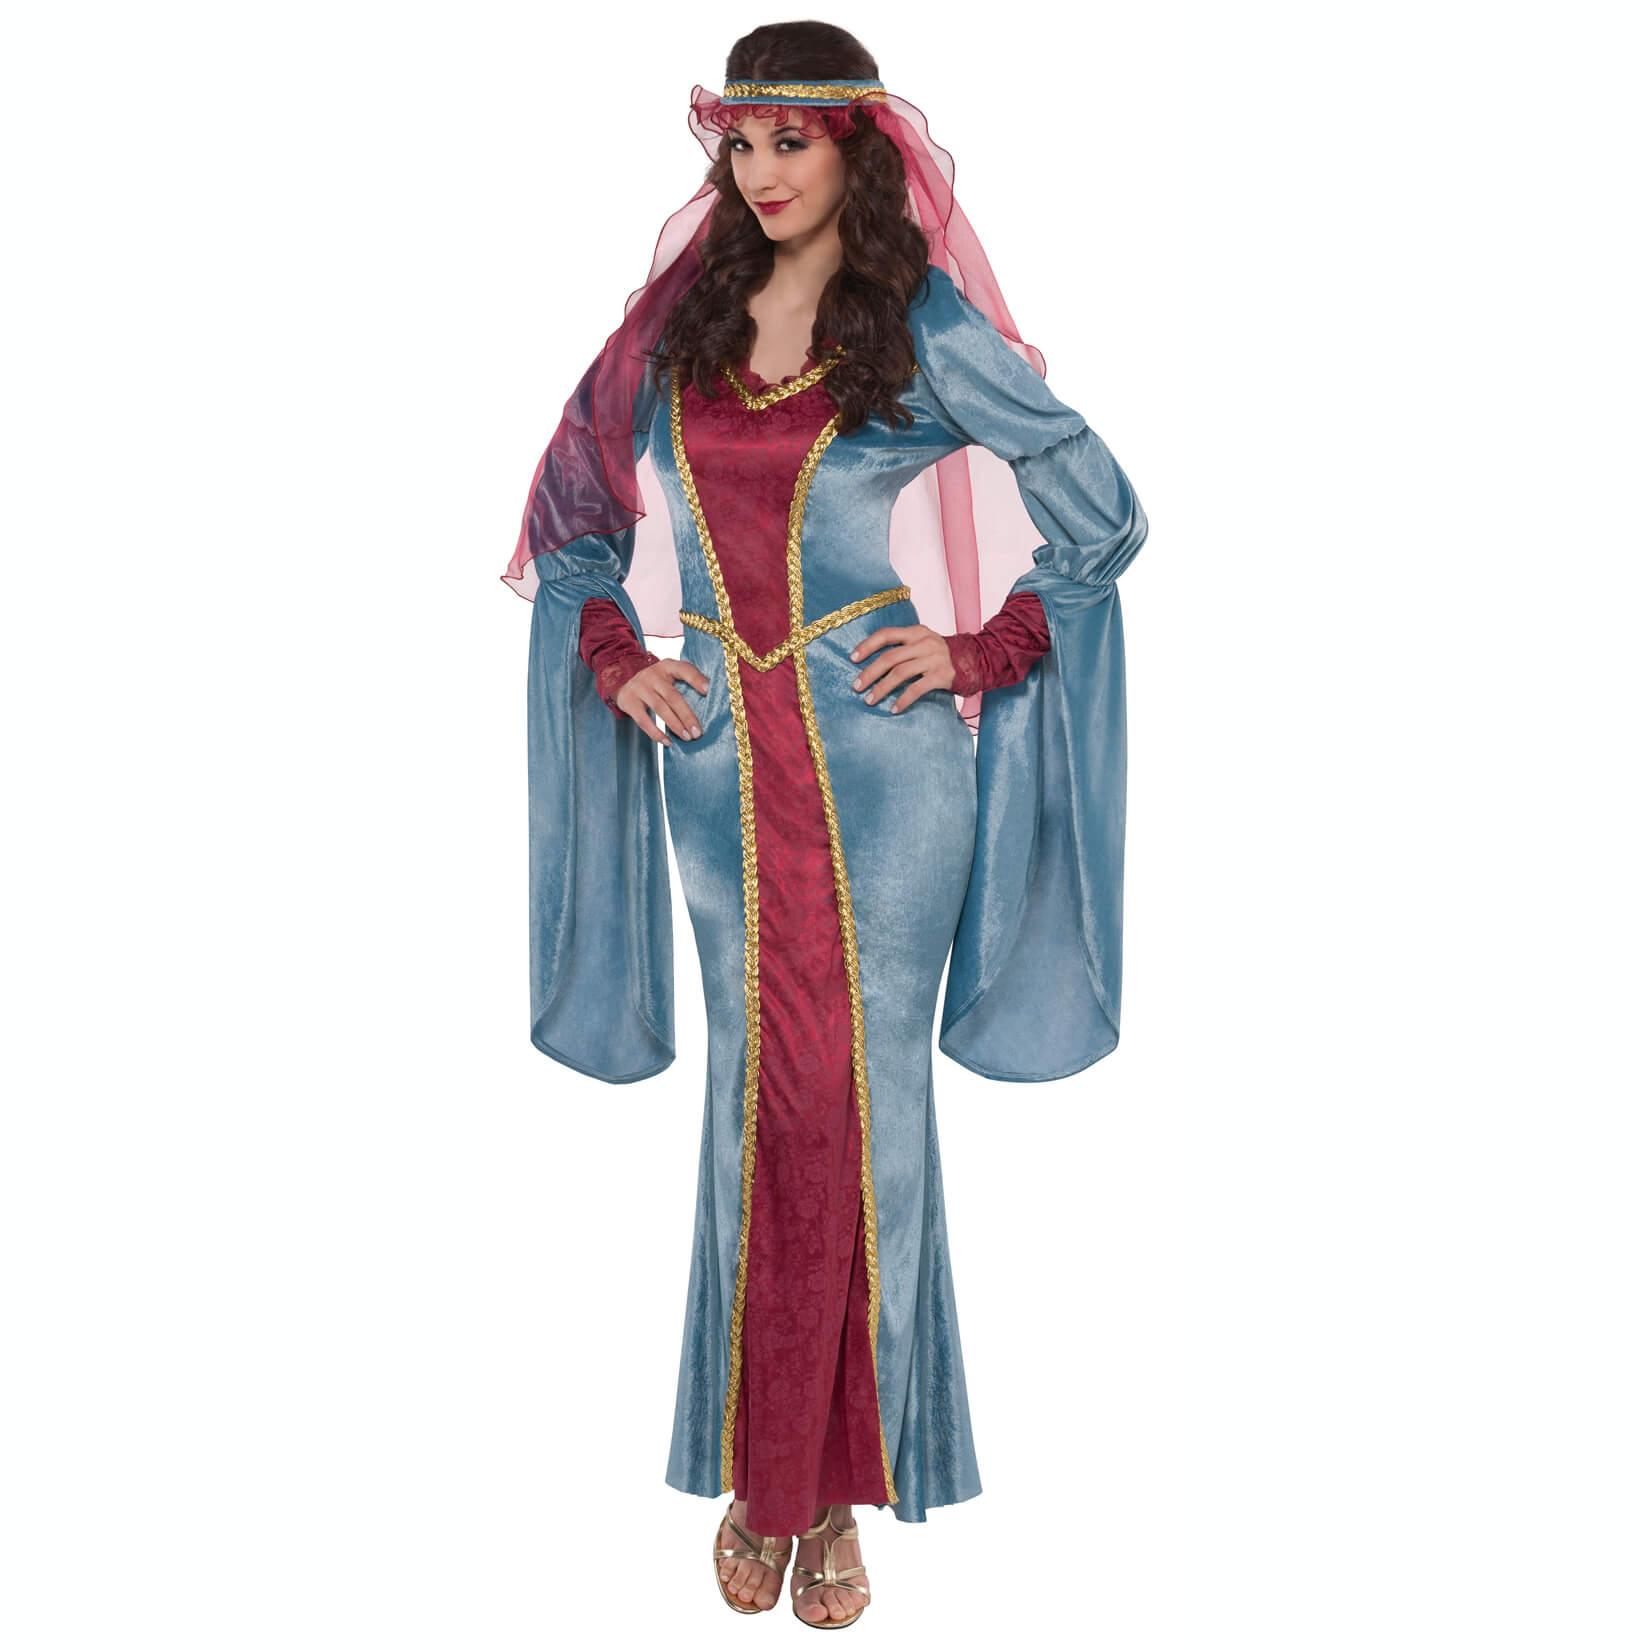 Adult Renaissance Queen Costume Costumes & Apparel - Party Centre